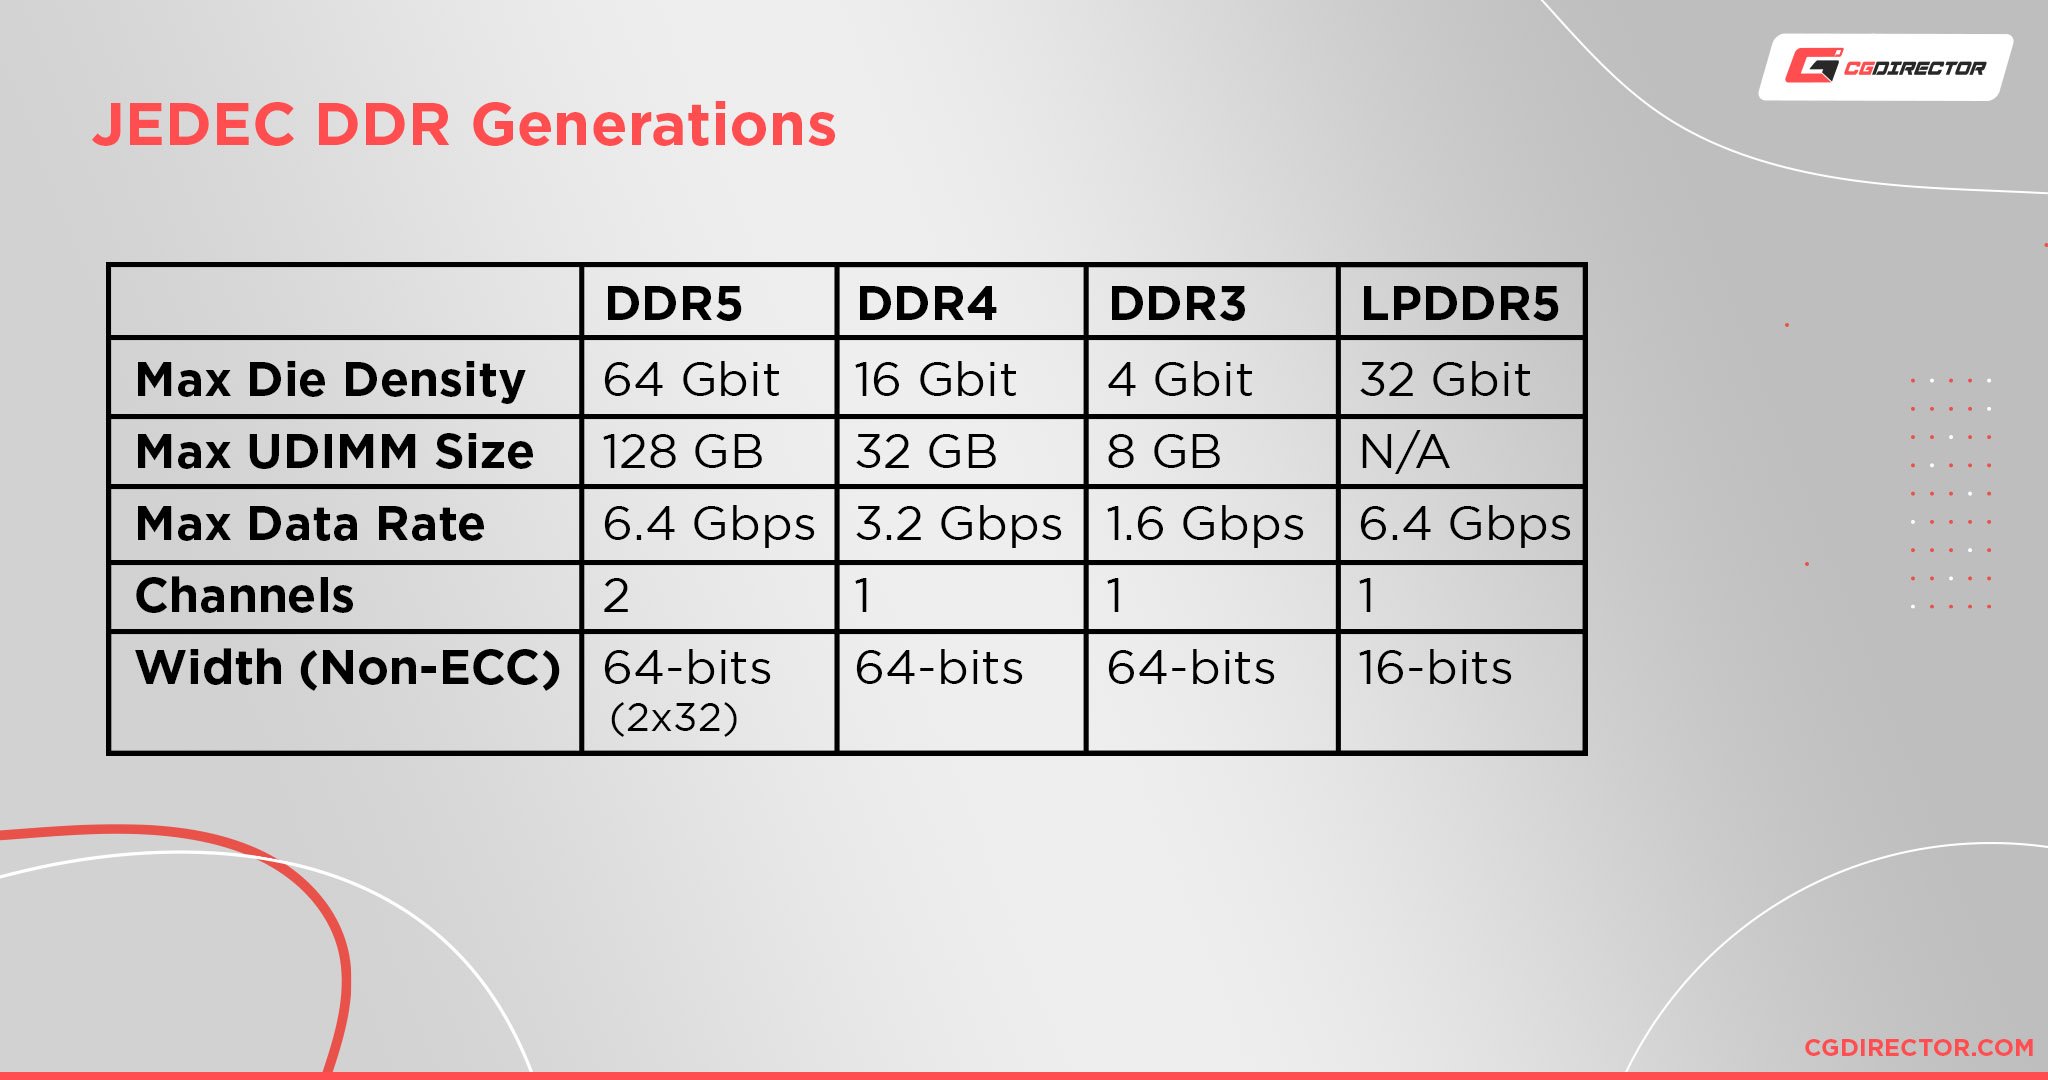 JEDEC DDR RAM Memory Generations Comparison